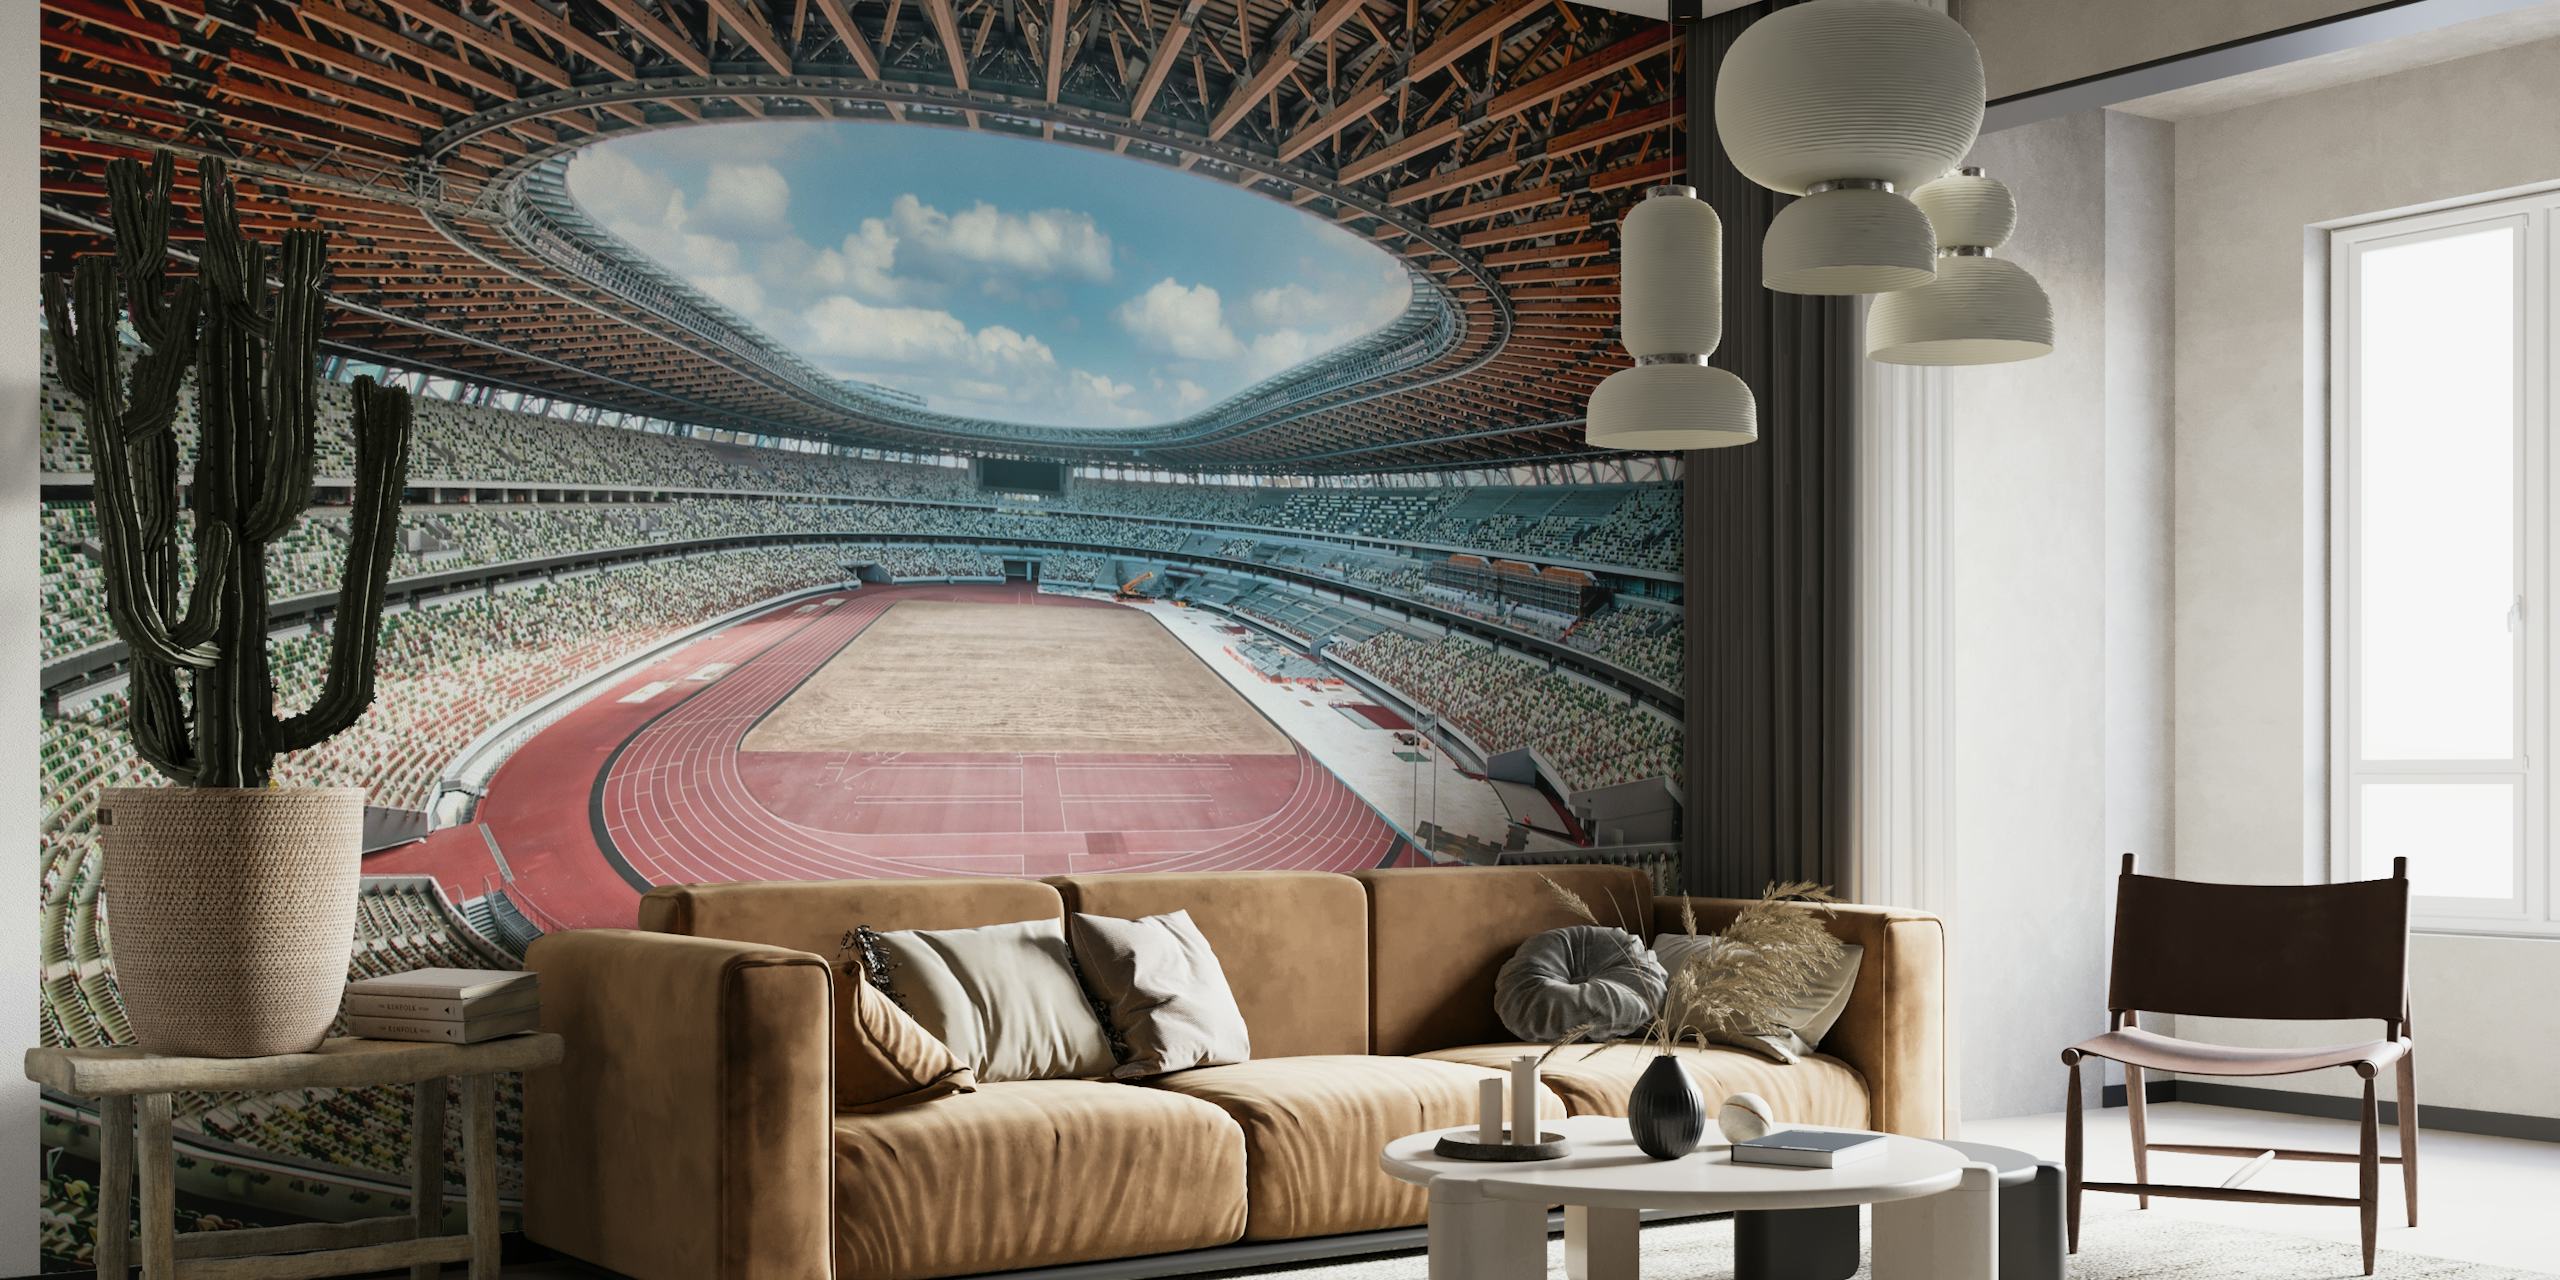 Tokyo 2020 Olympic Stadium wallpaper